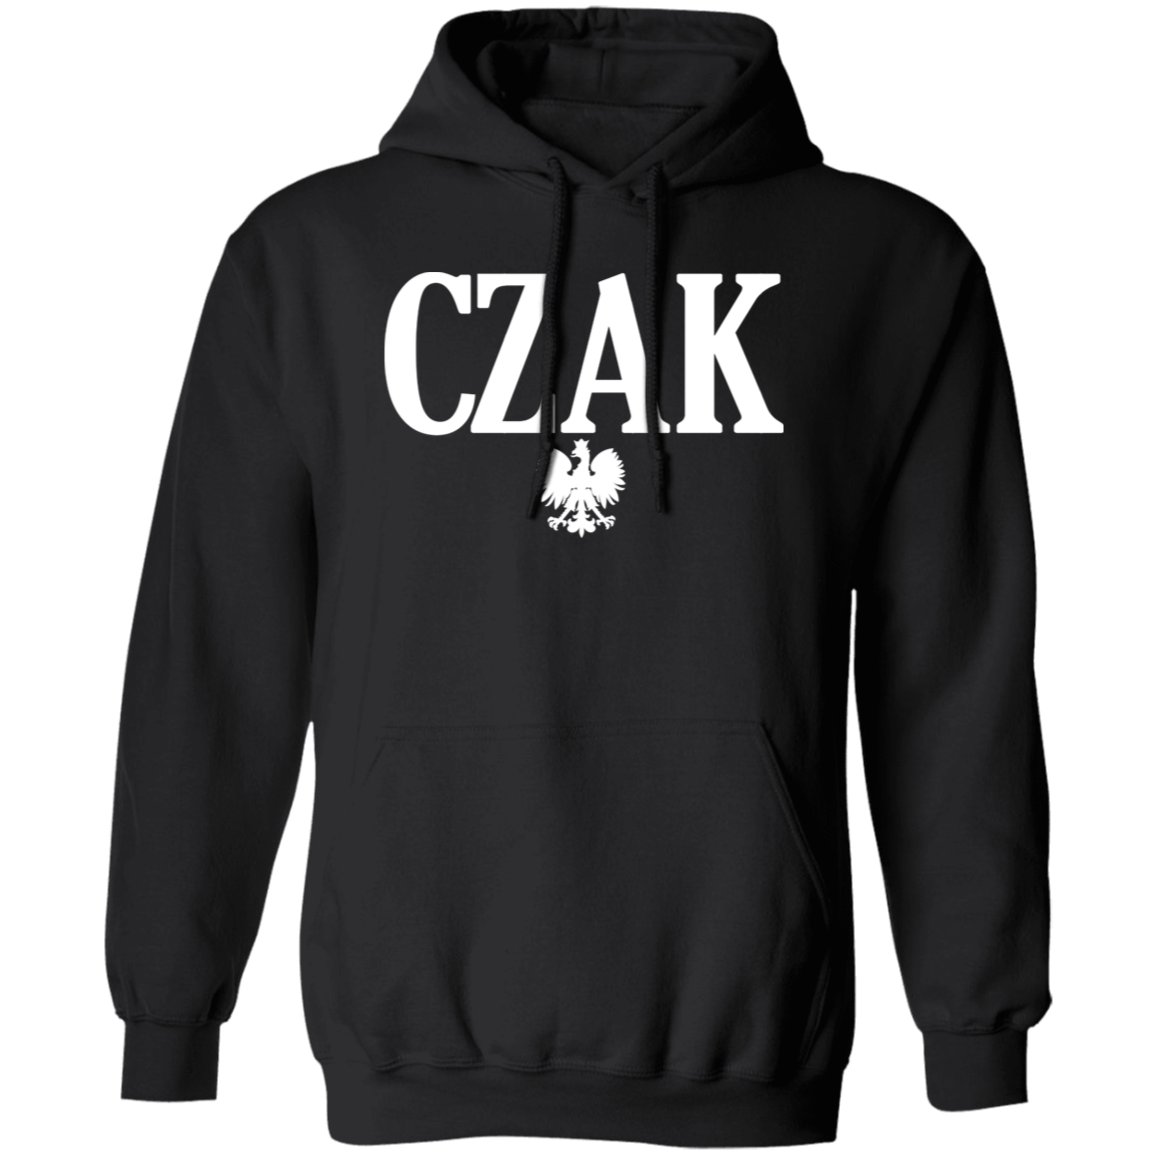 CZAK Polish Surname Ending Apparel CustomCat G185 Pullover Hoodie Black S